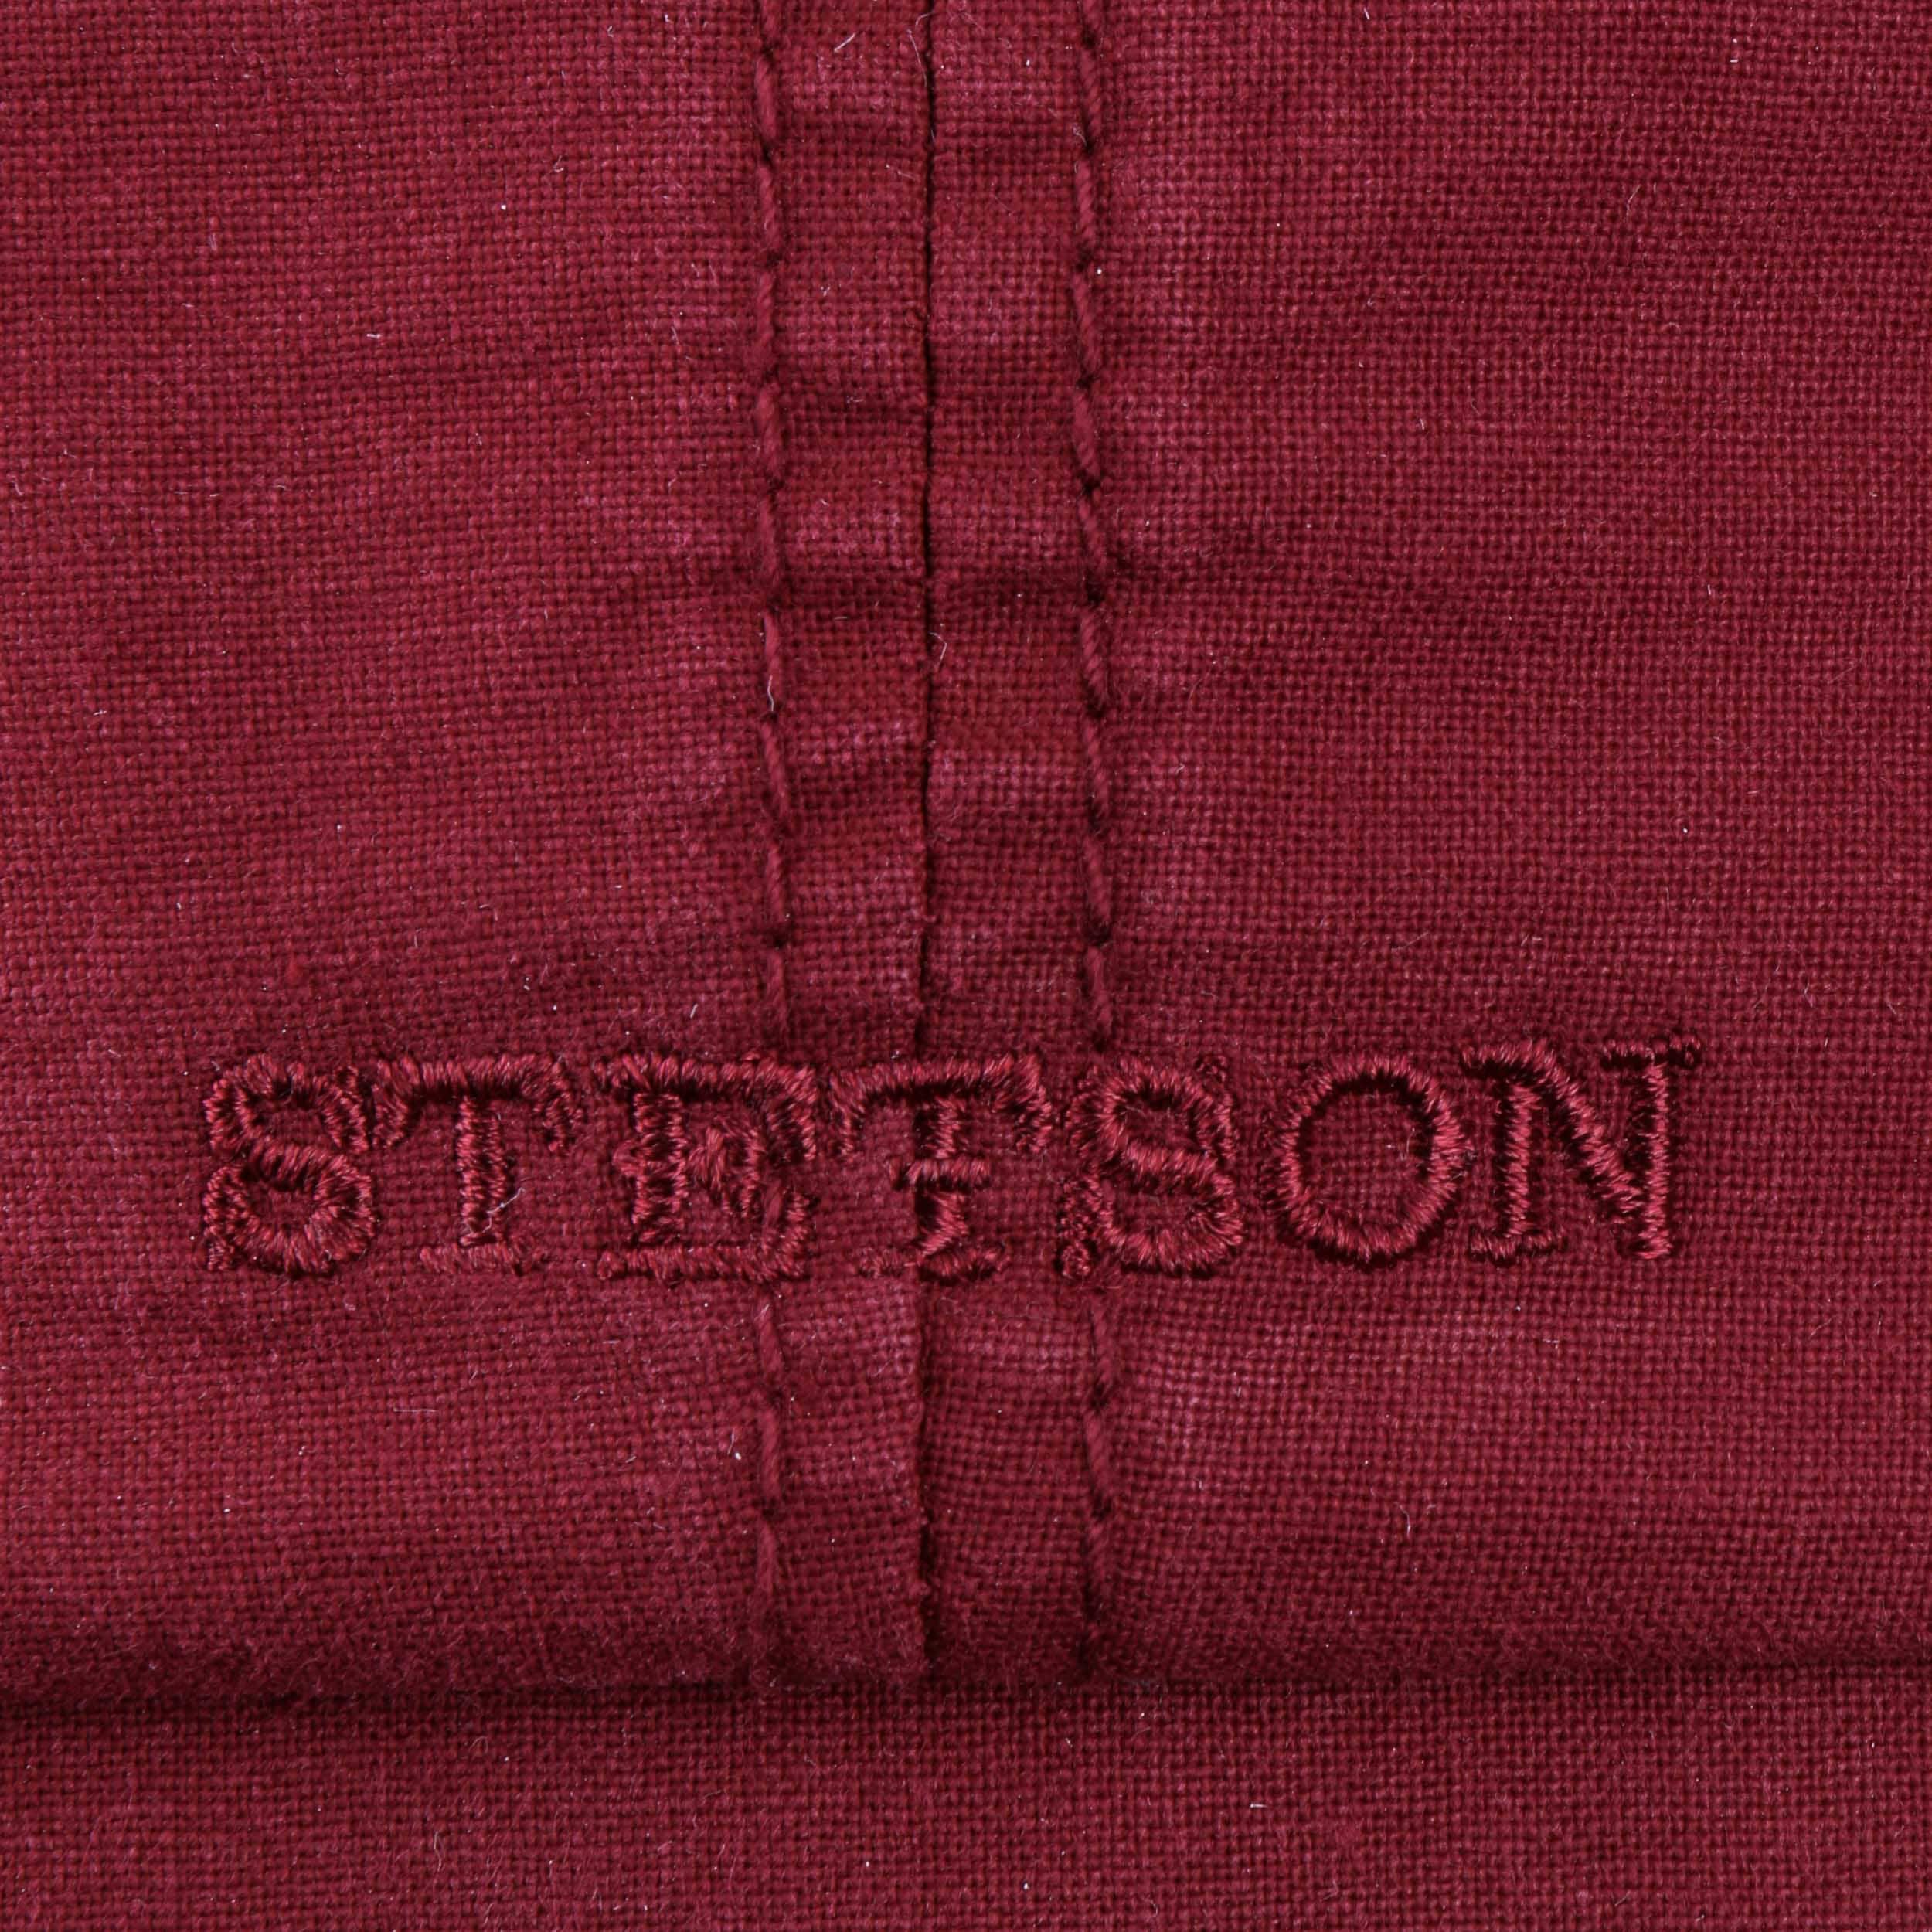 Hatteras Cotton Cap by Stetson - 79,00